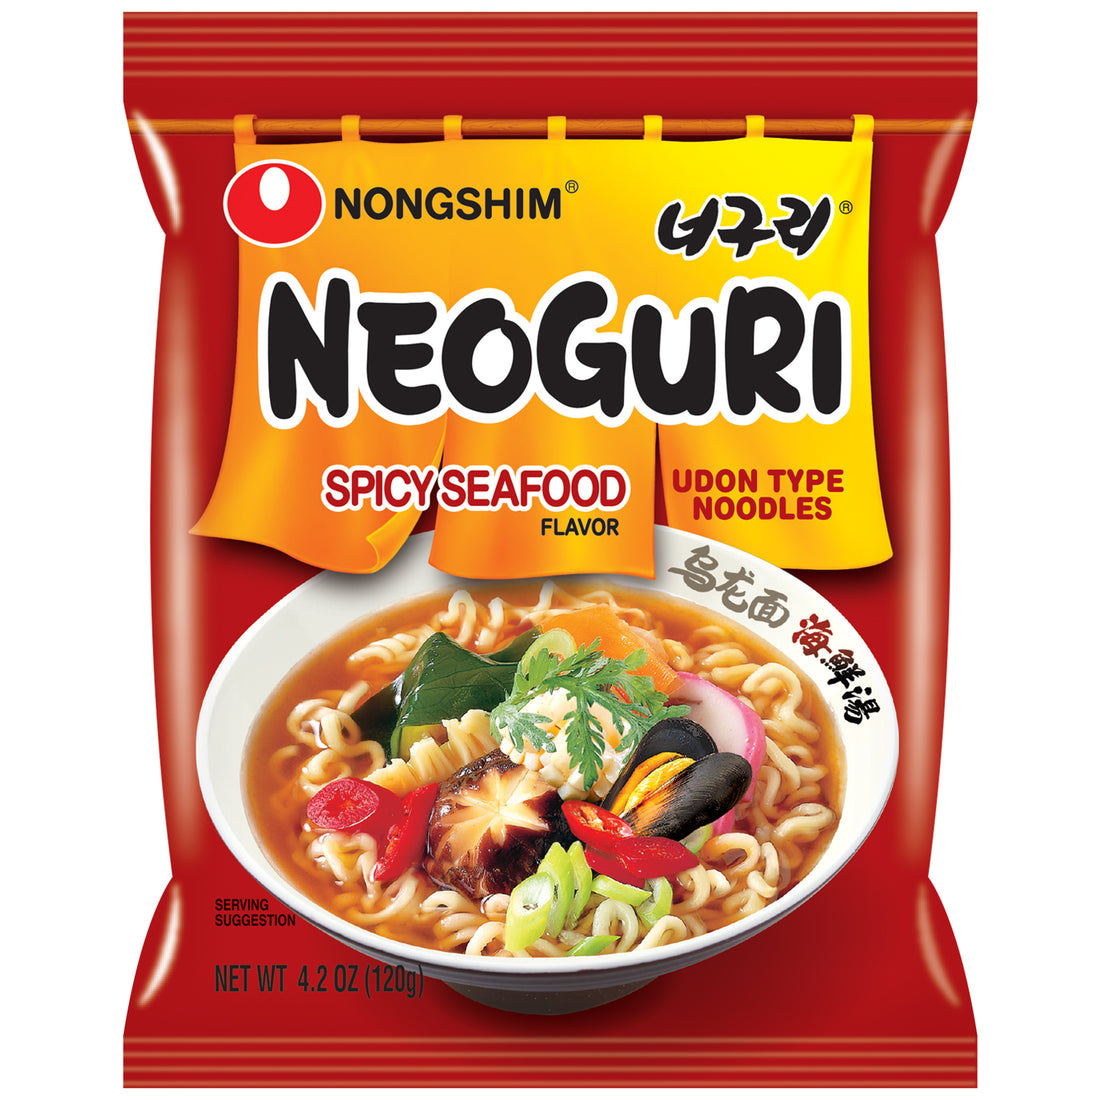 Nongshim Neoguri Ramen Noodle Bag, Spicy Seafood - 4 Pack